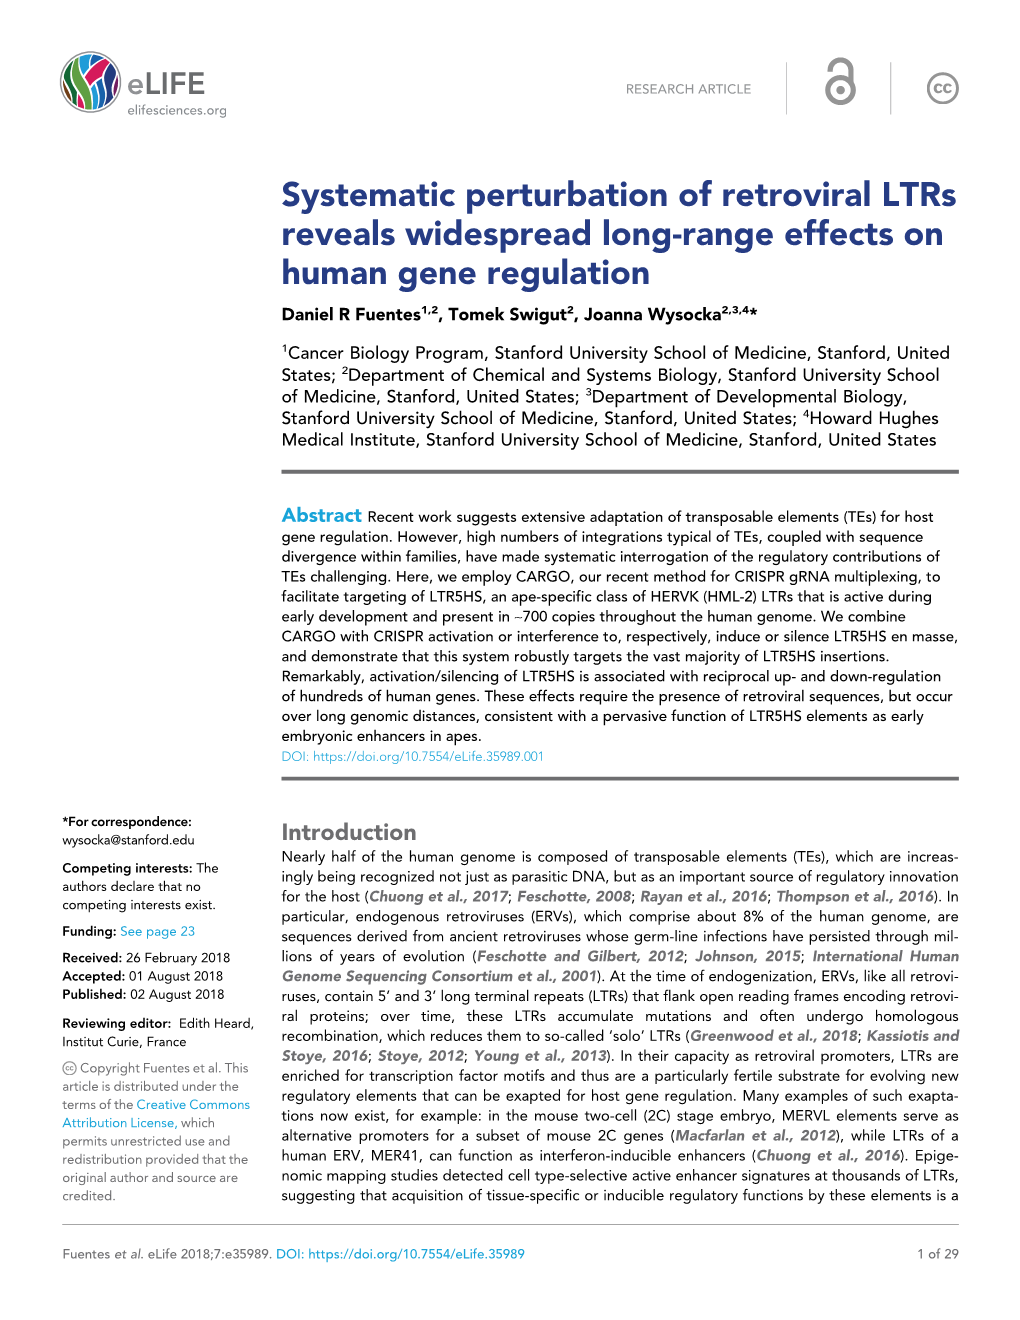 Systematic Perturbation of Retroviral Ltrs Reveals Widespread Long-Range Effects on Human Gene Regulation Daniel R Fuentes1,2, Tomek Swigut2, Joanna Wysocka2,3,4*